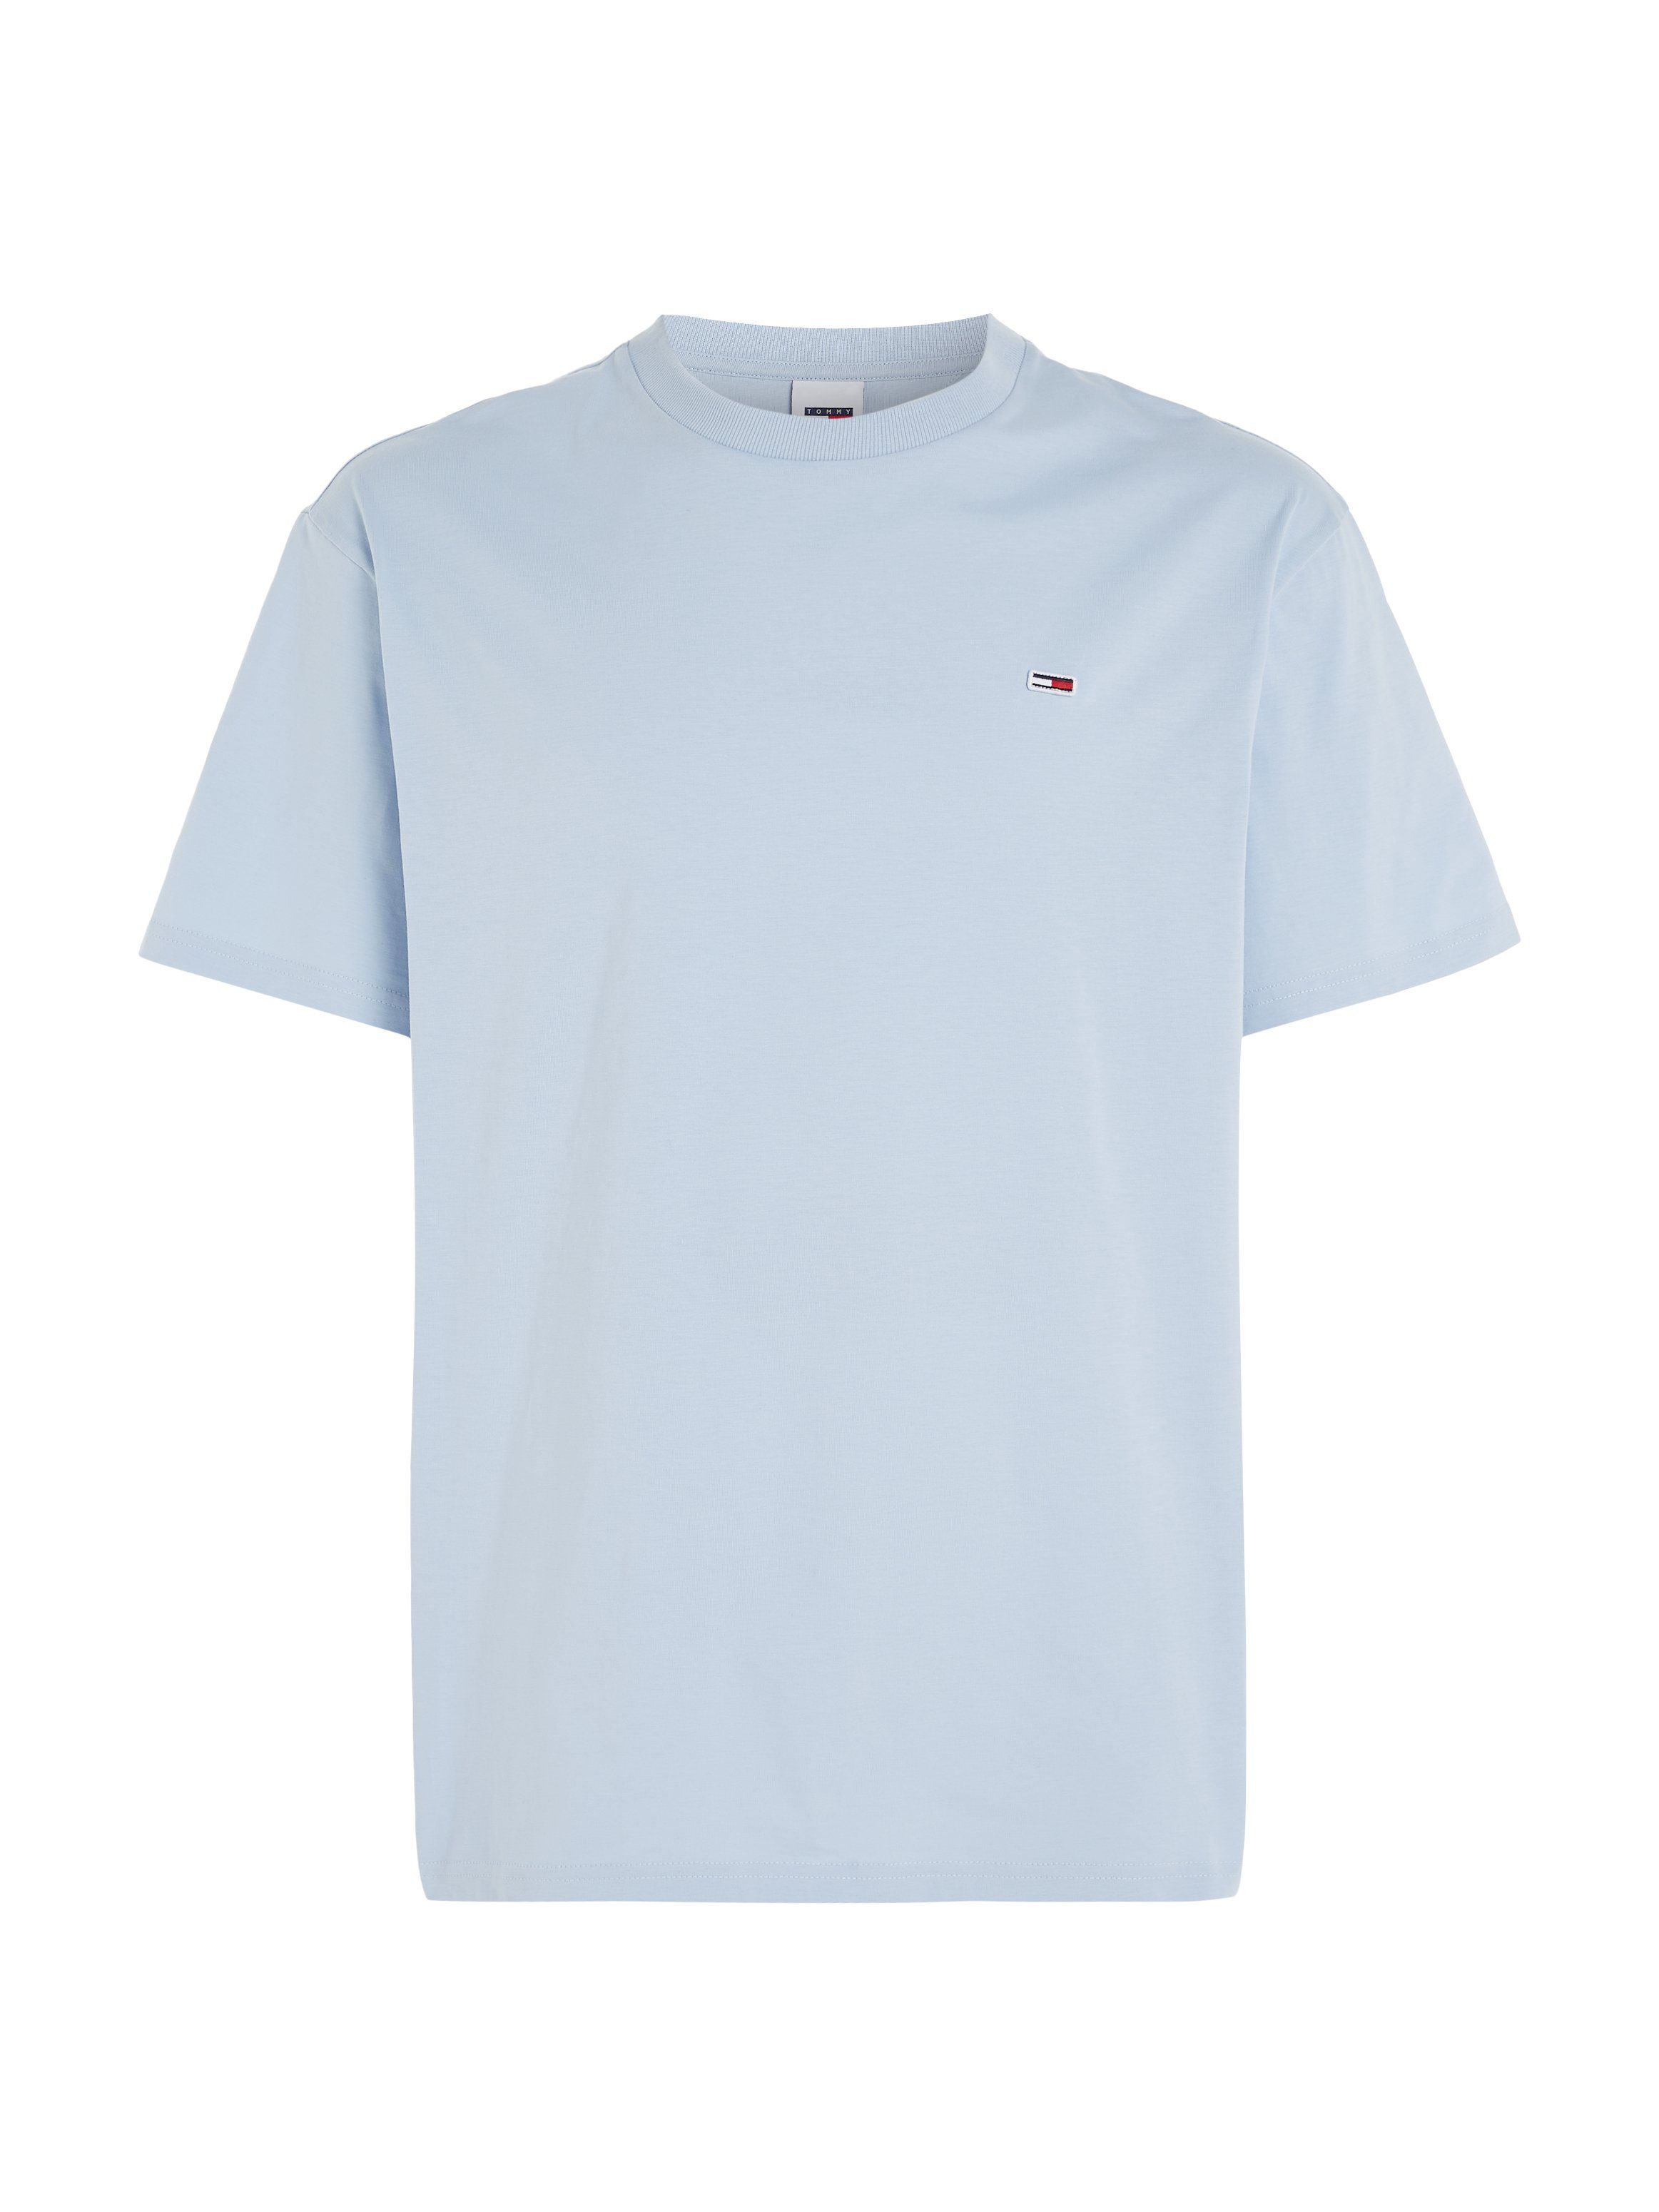 Tommy Jeans T-Shirt TJM JERSEY NECK breezy CLASSIC Logostickerei C mit blue